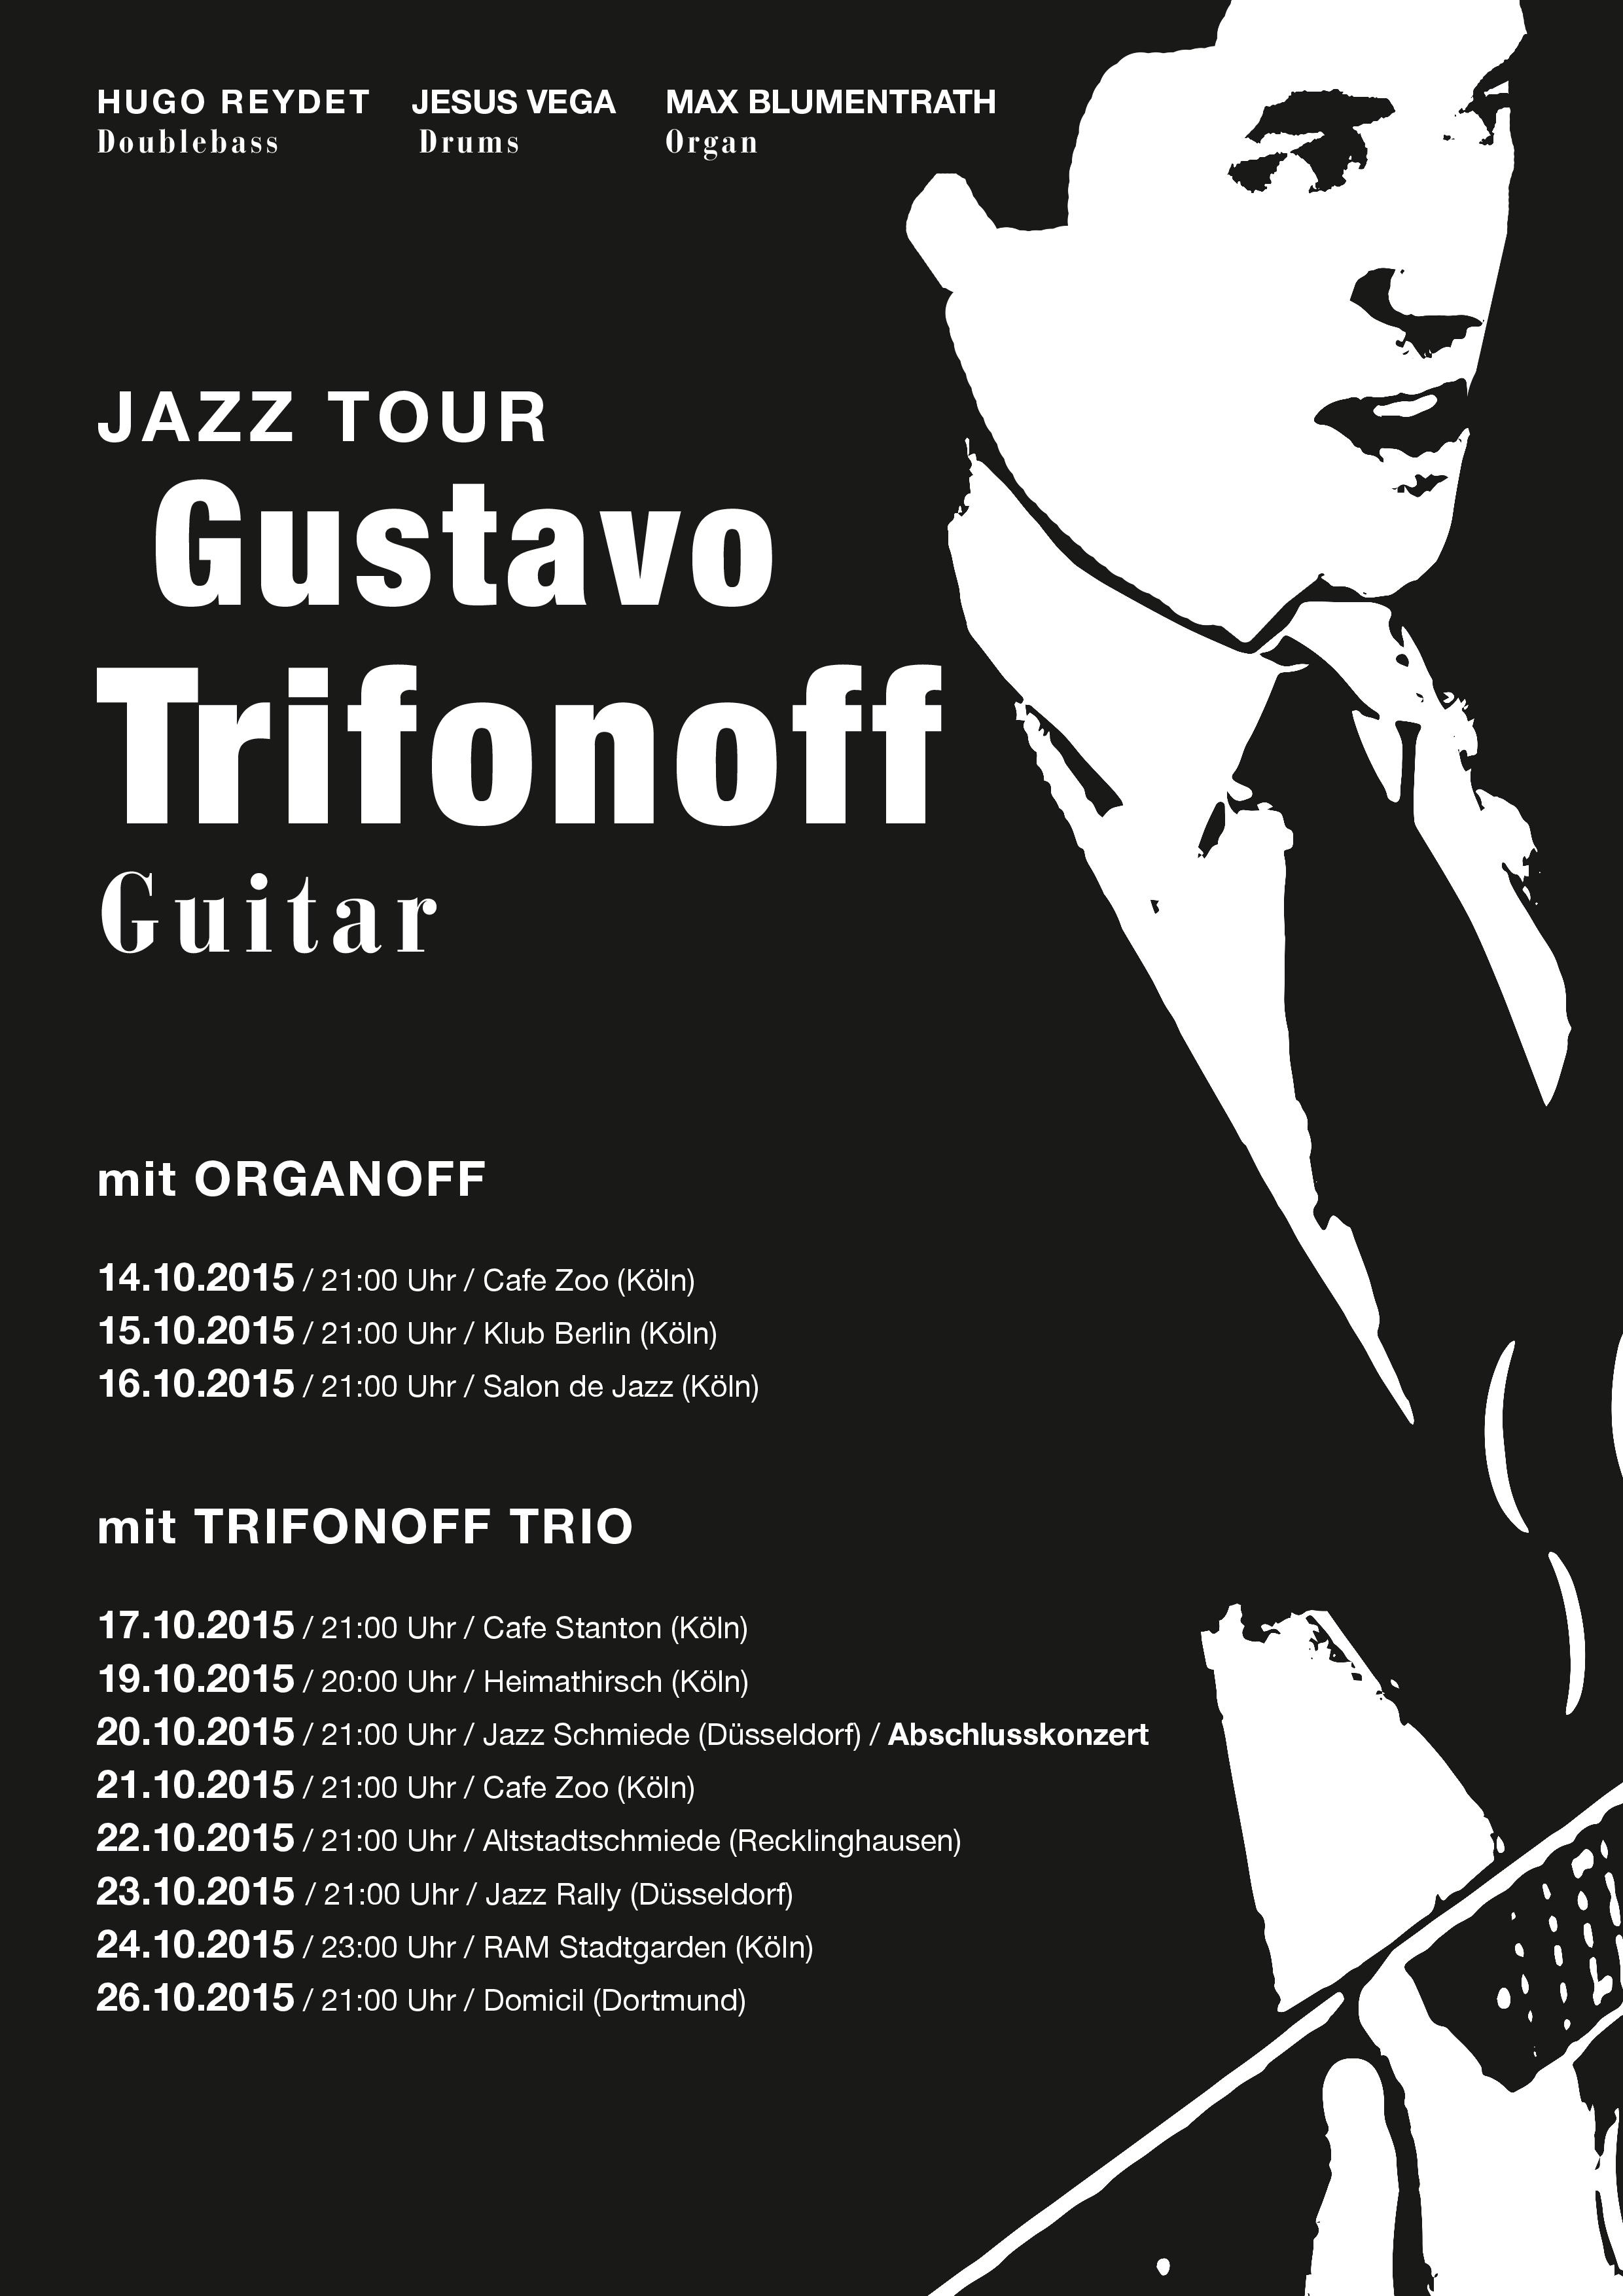 Jazz-Tour-Organoff-Gustavo-Trifonoff-Max-Blumentrath-Jesus-Vega-Hugo-Reydet